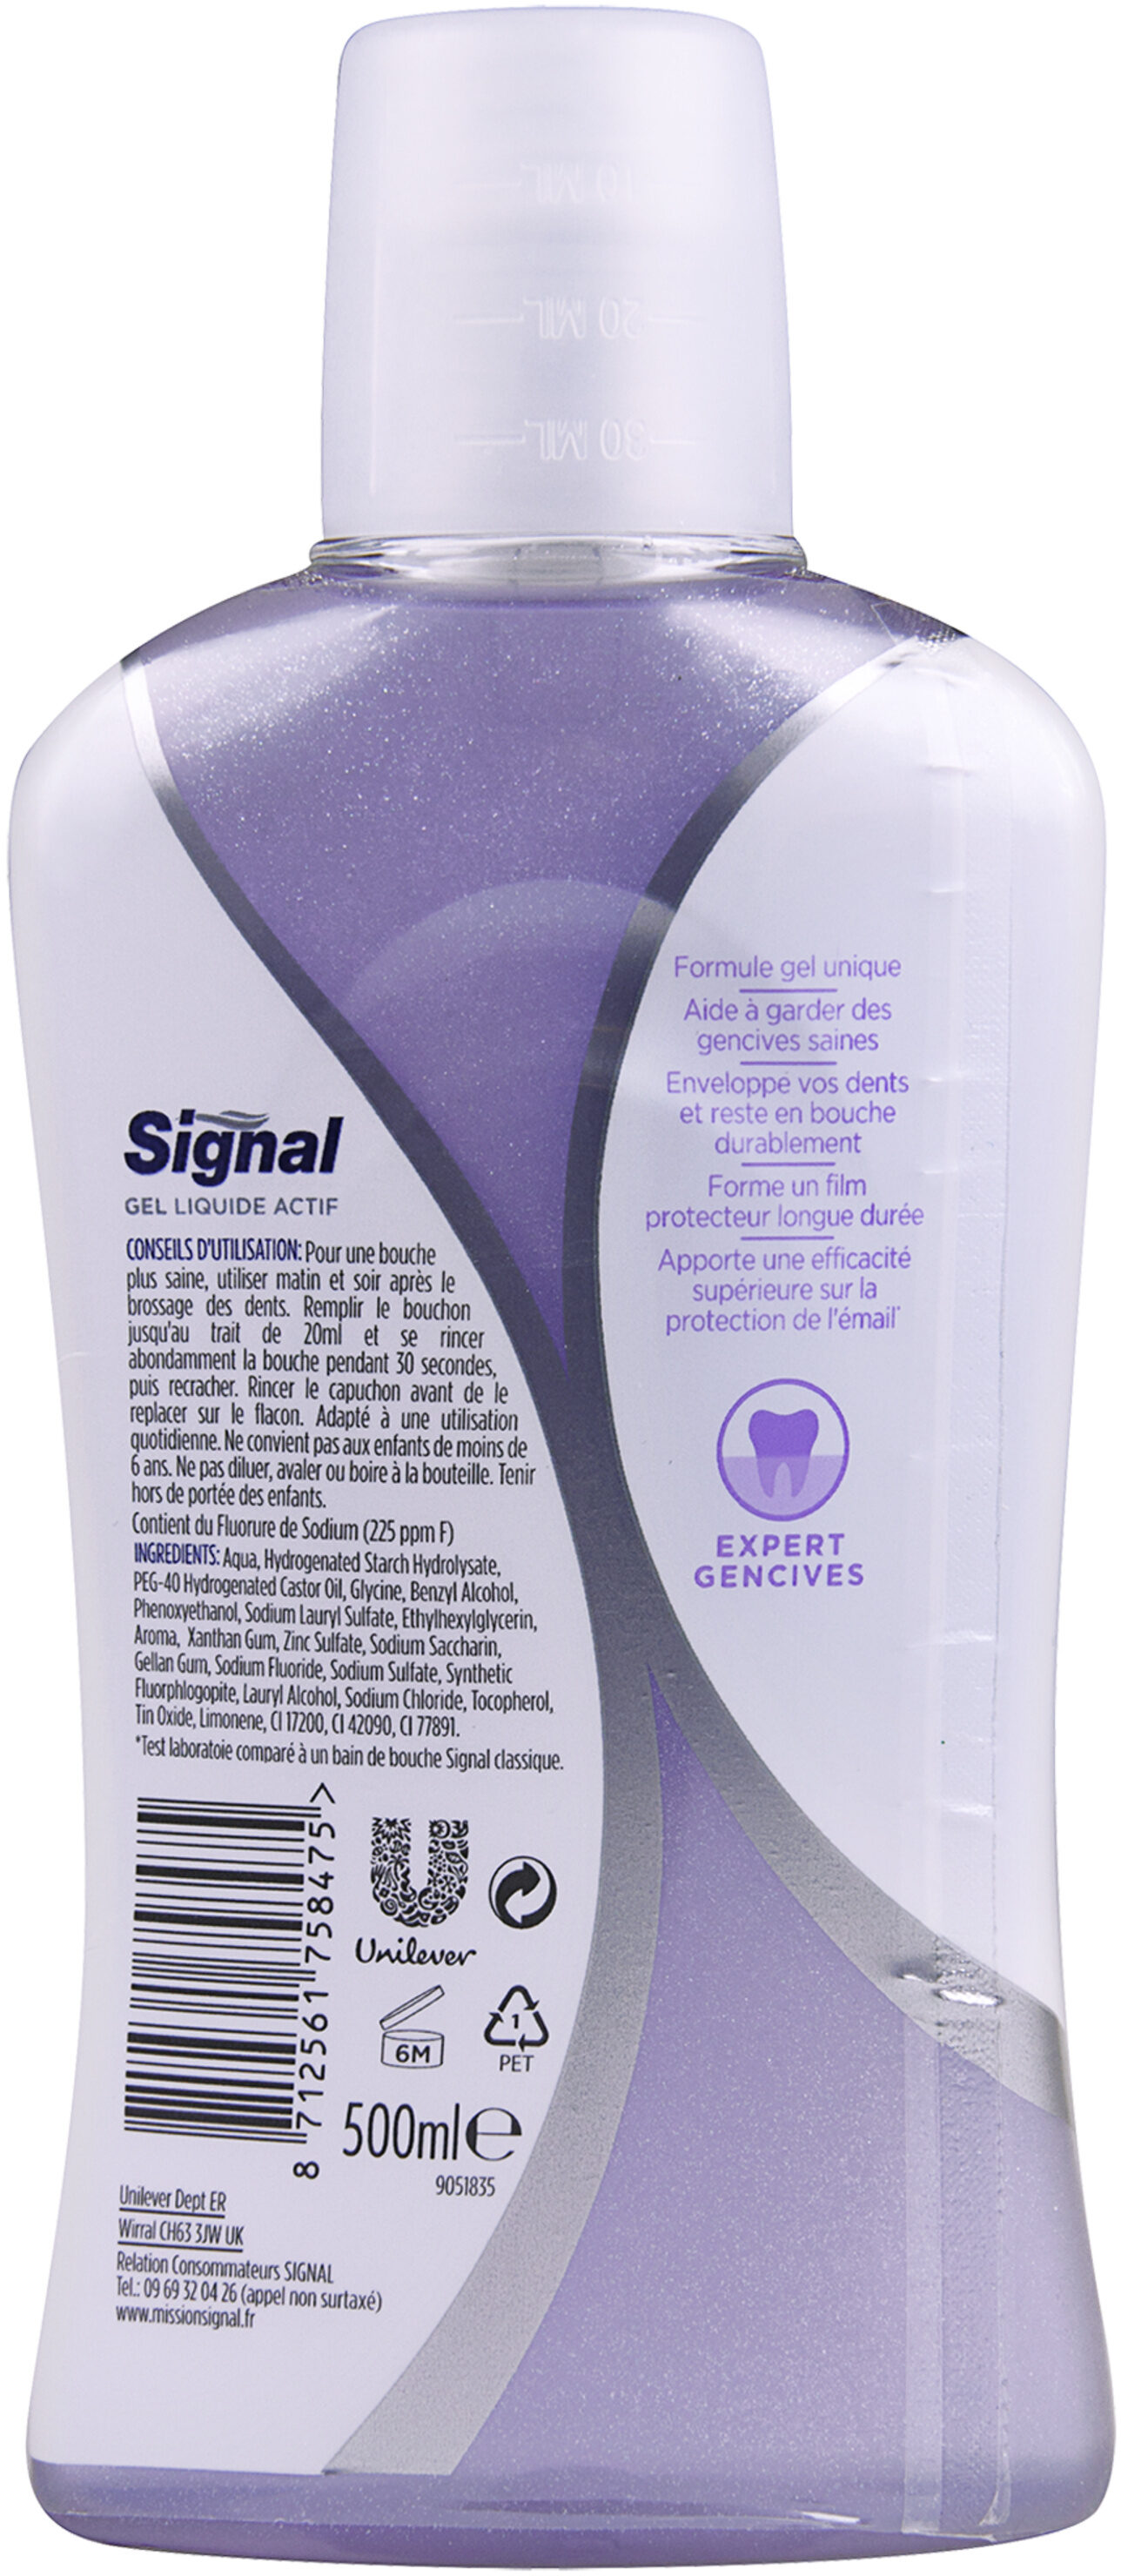 Signal Bain de Bouche Gel Liquide Actif Expert Gencives - Product - en